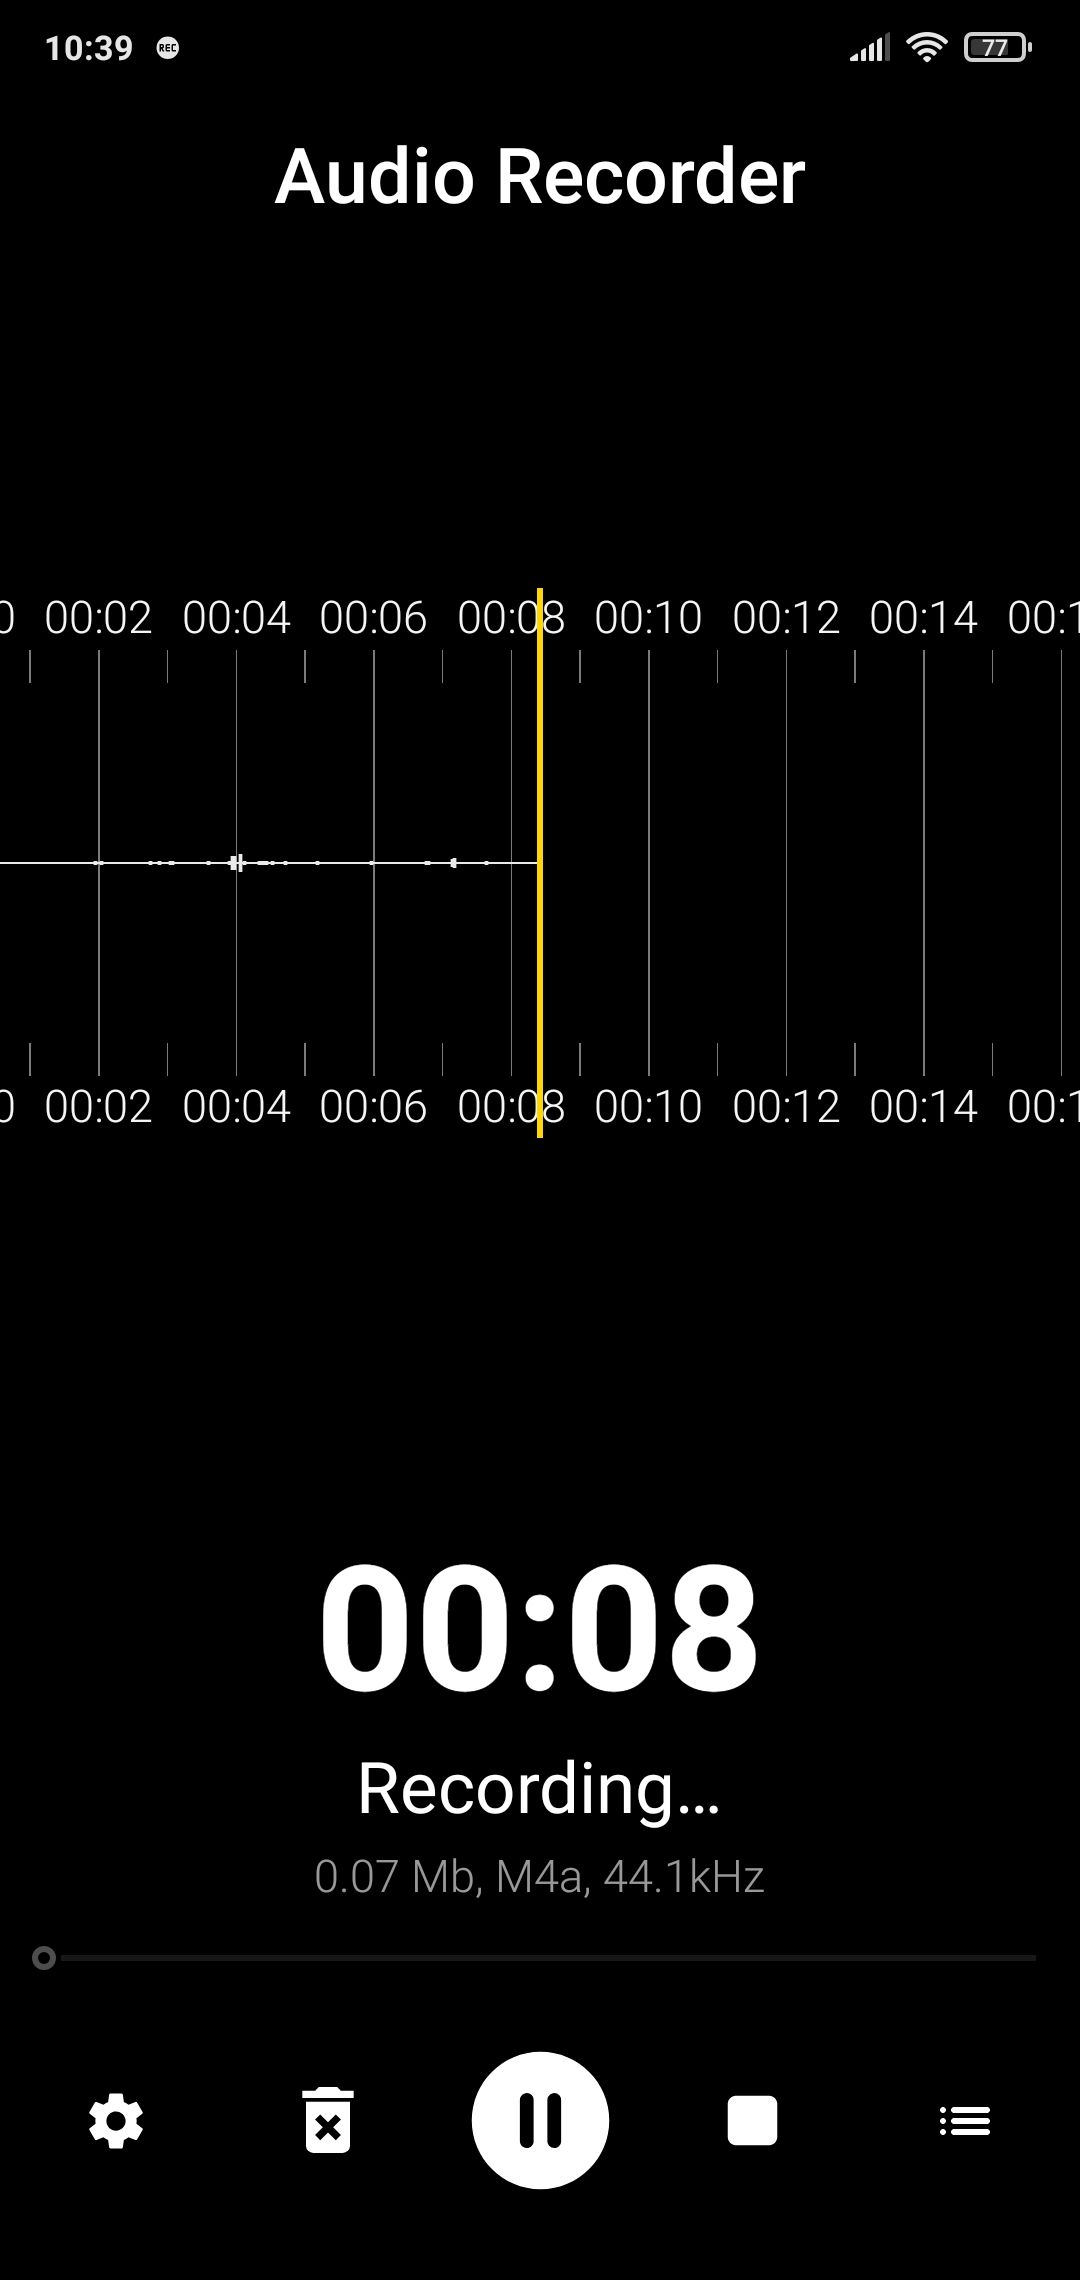 Screenshot of Audio Recorder interface when recording